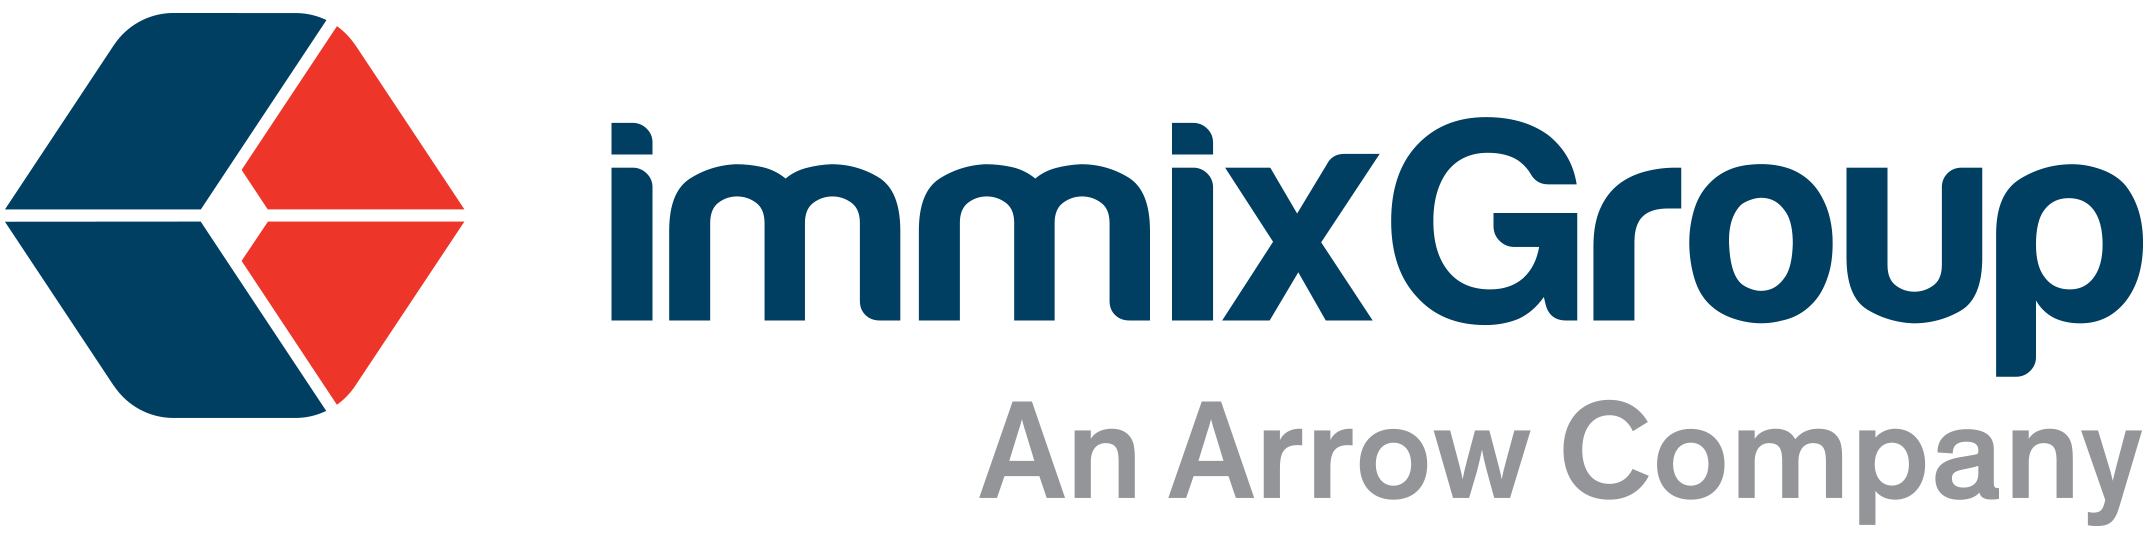 immixGroup logo